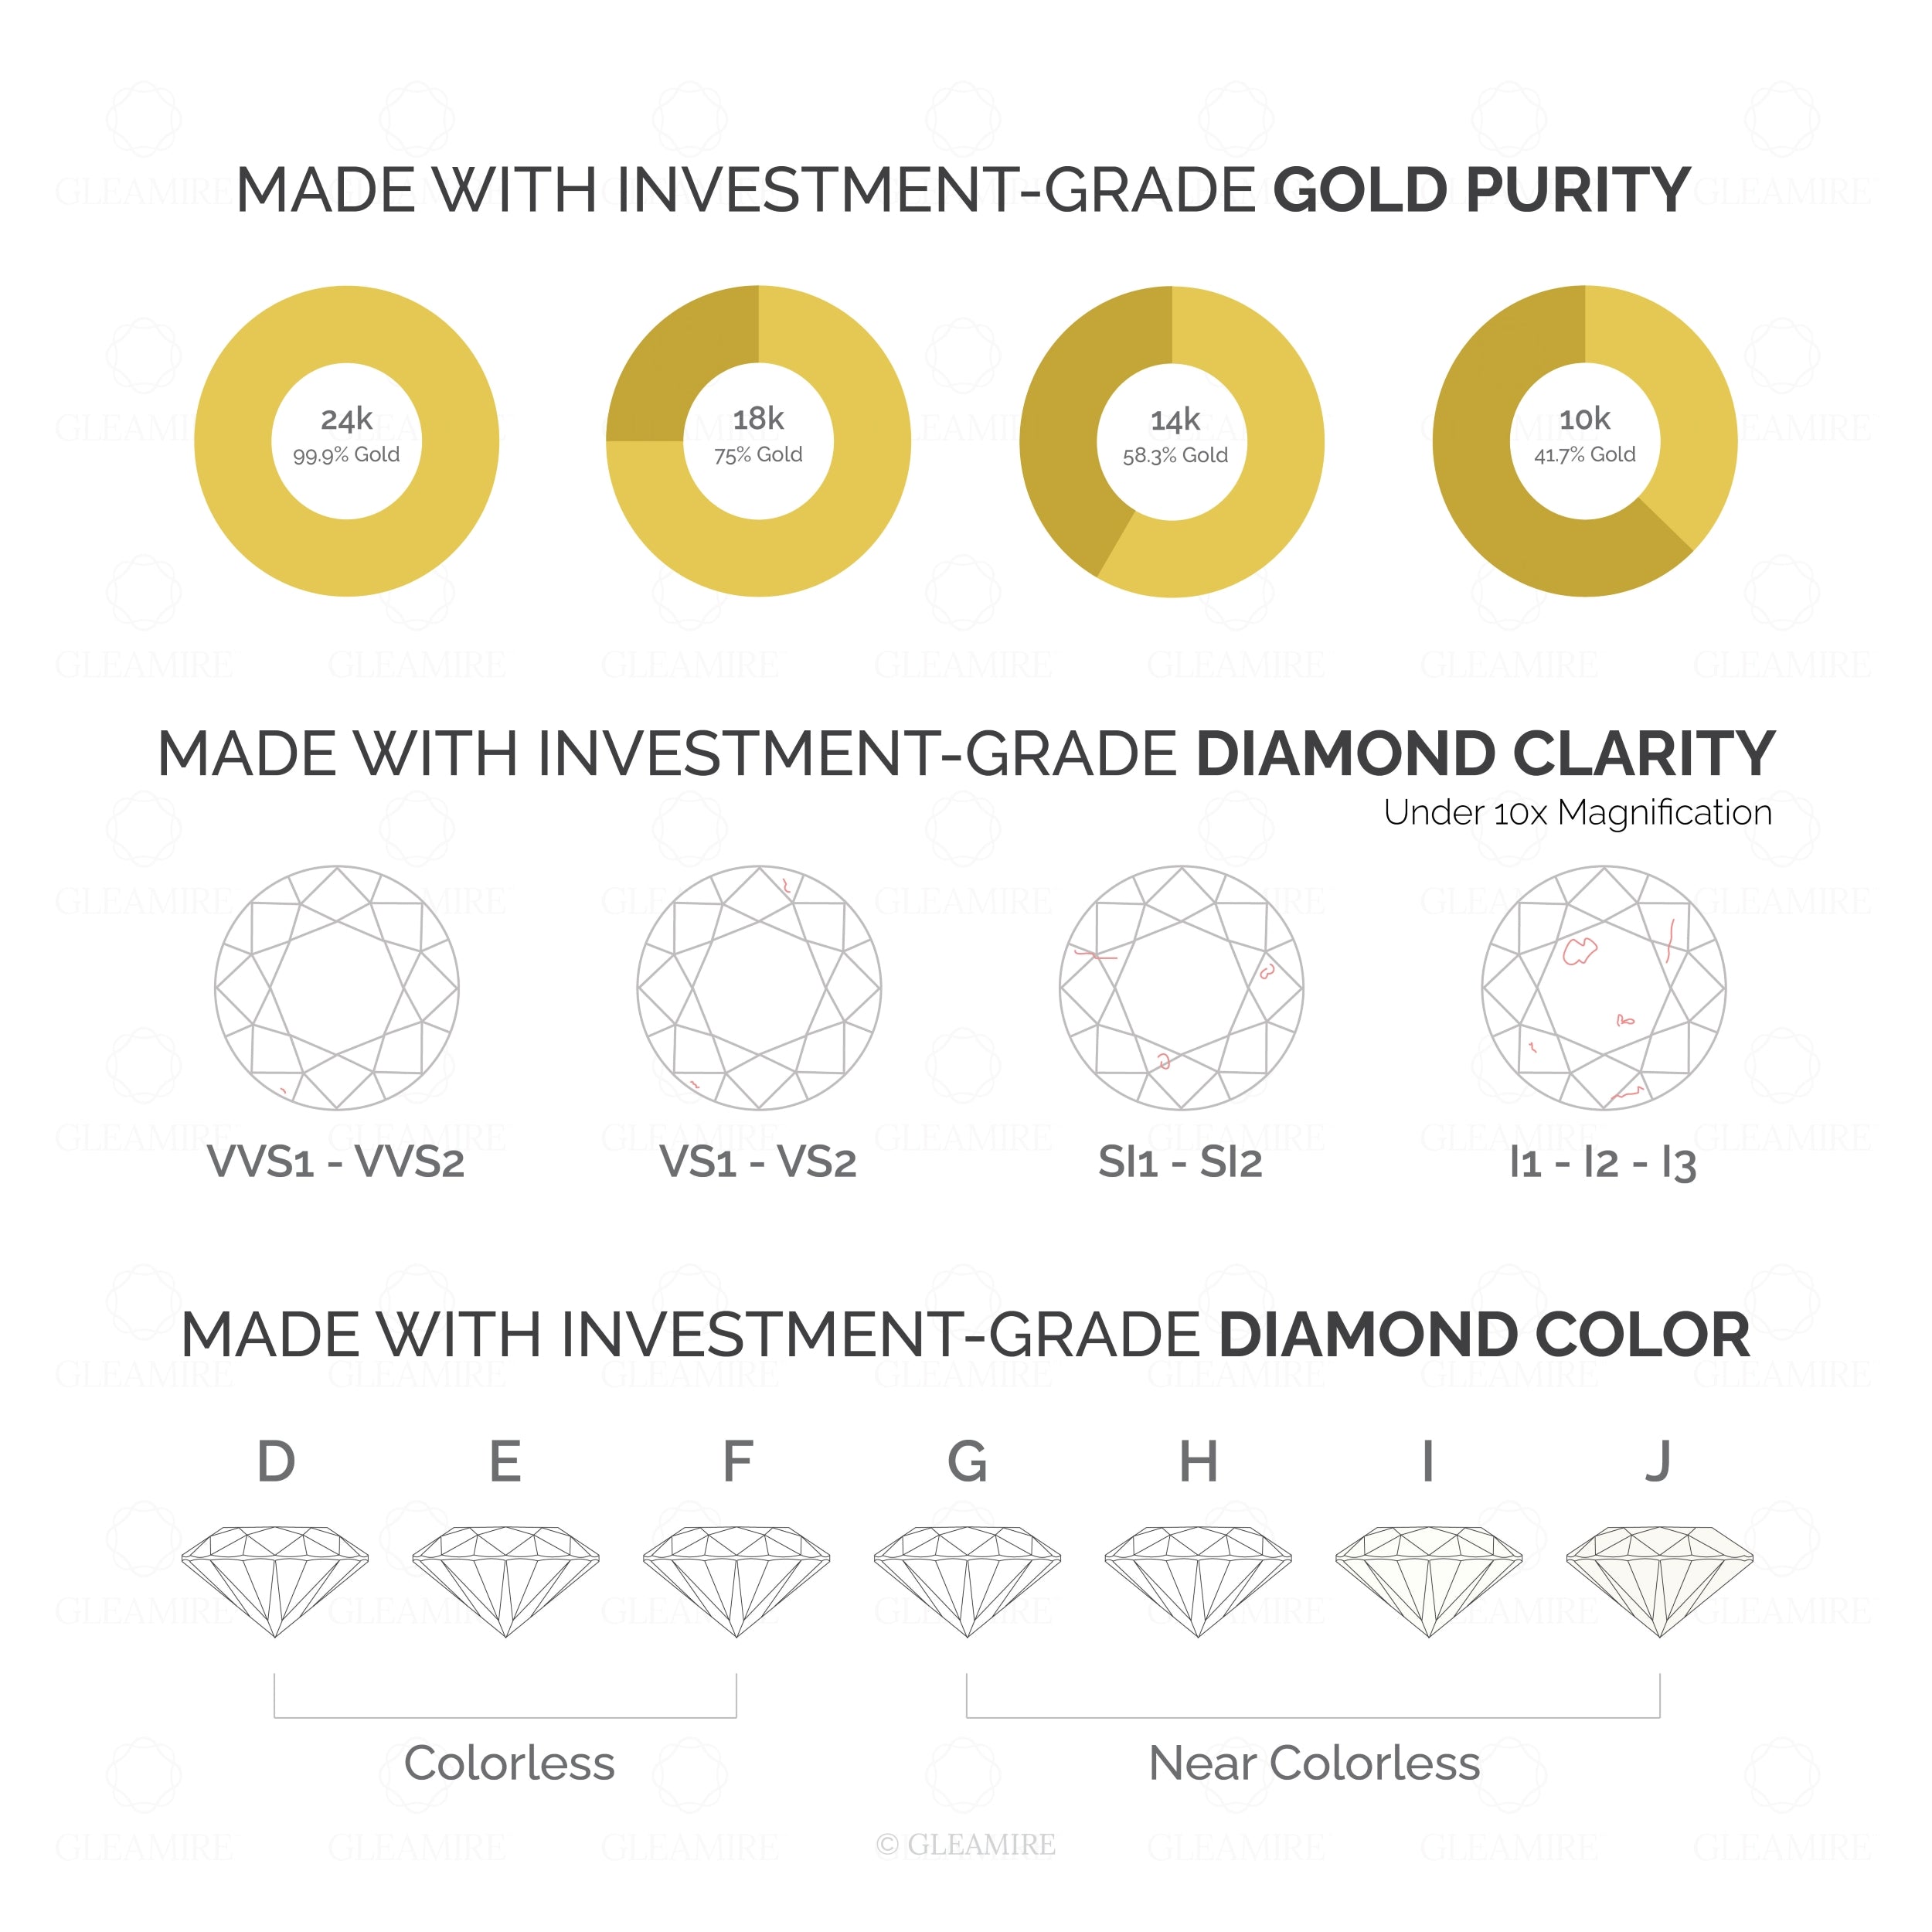 Certified 14K Gold Natural Diamond w/ Black CZ Designer Round Butterfly White Necklace